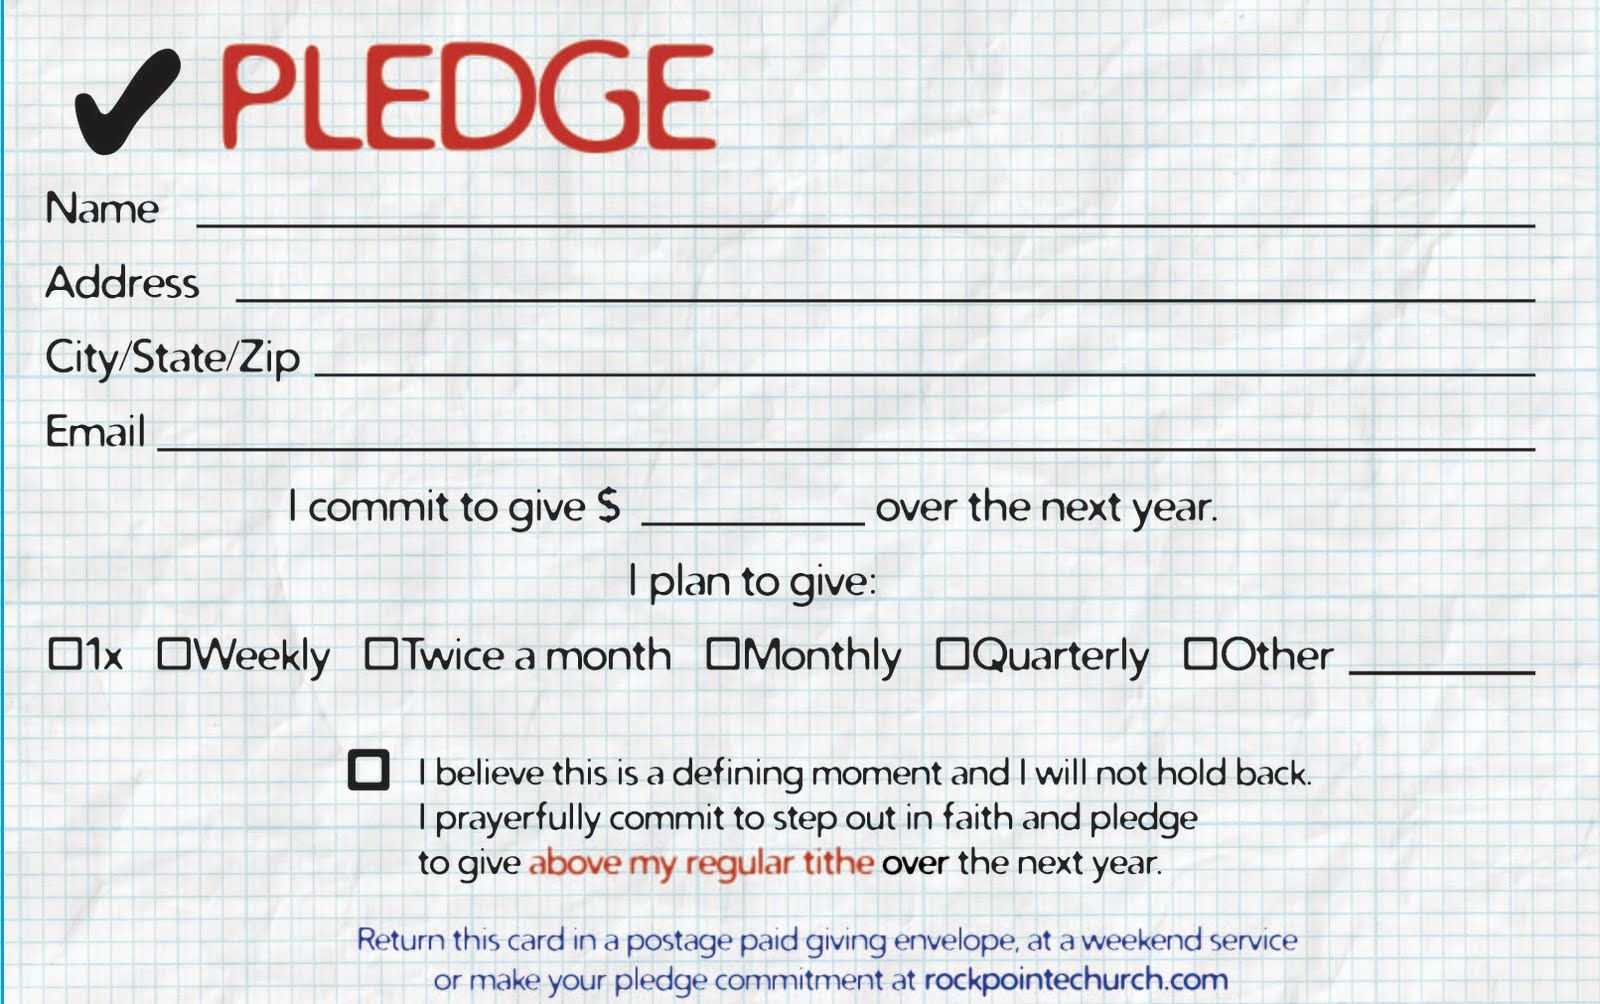 Pledge Cards For Churches | Pledge Card Templates | My Stuff Inside Free Pledge Card Template